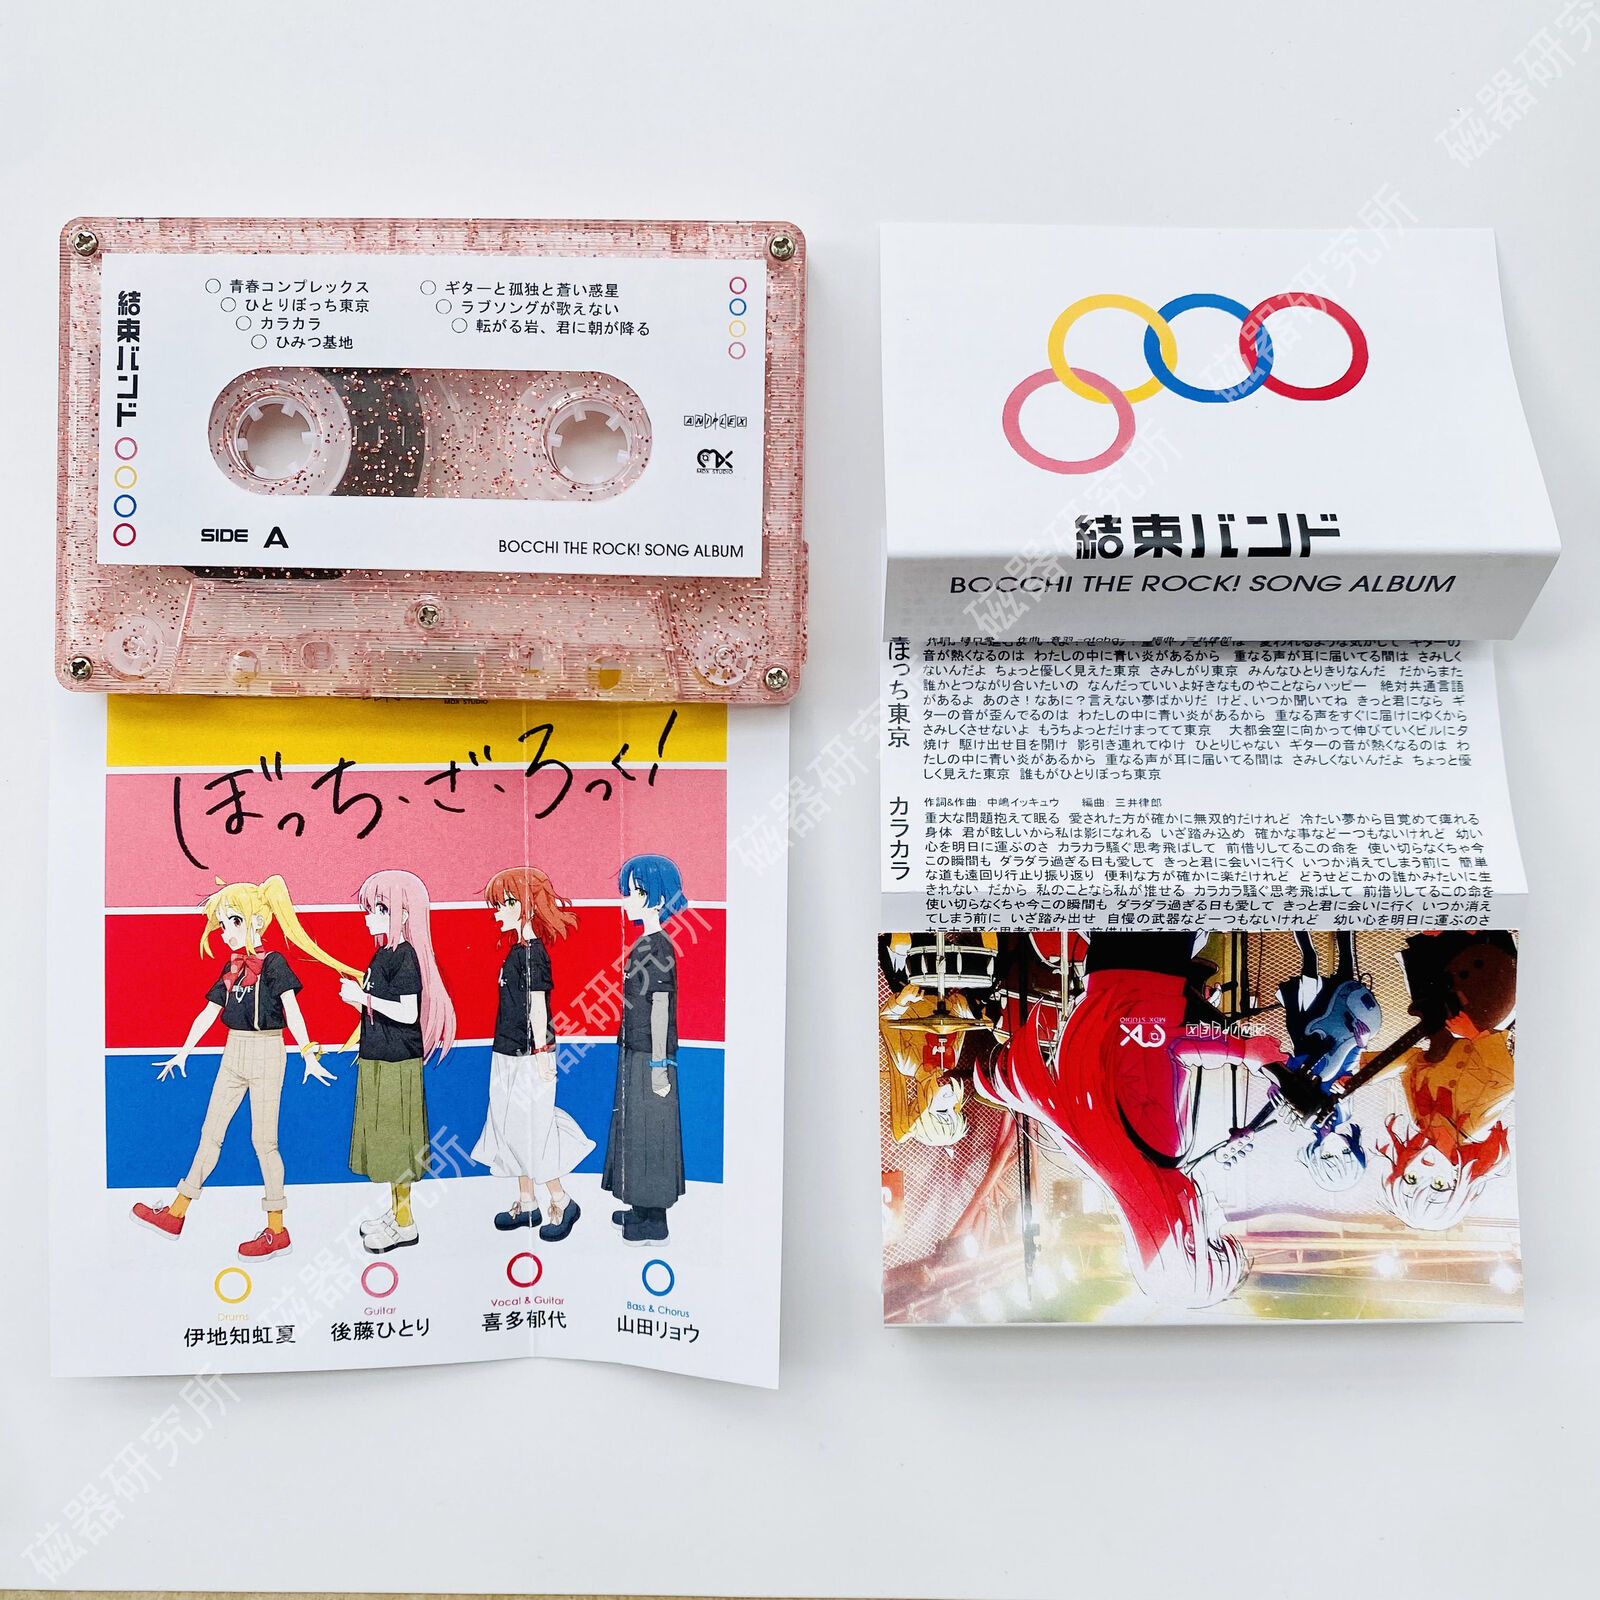 Anime BOCCHI THE ROCK Soundtrack Tapes Albums Memorabilia Gift Collection